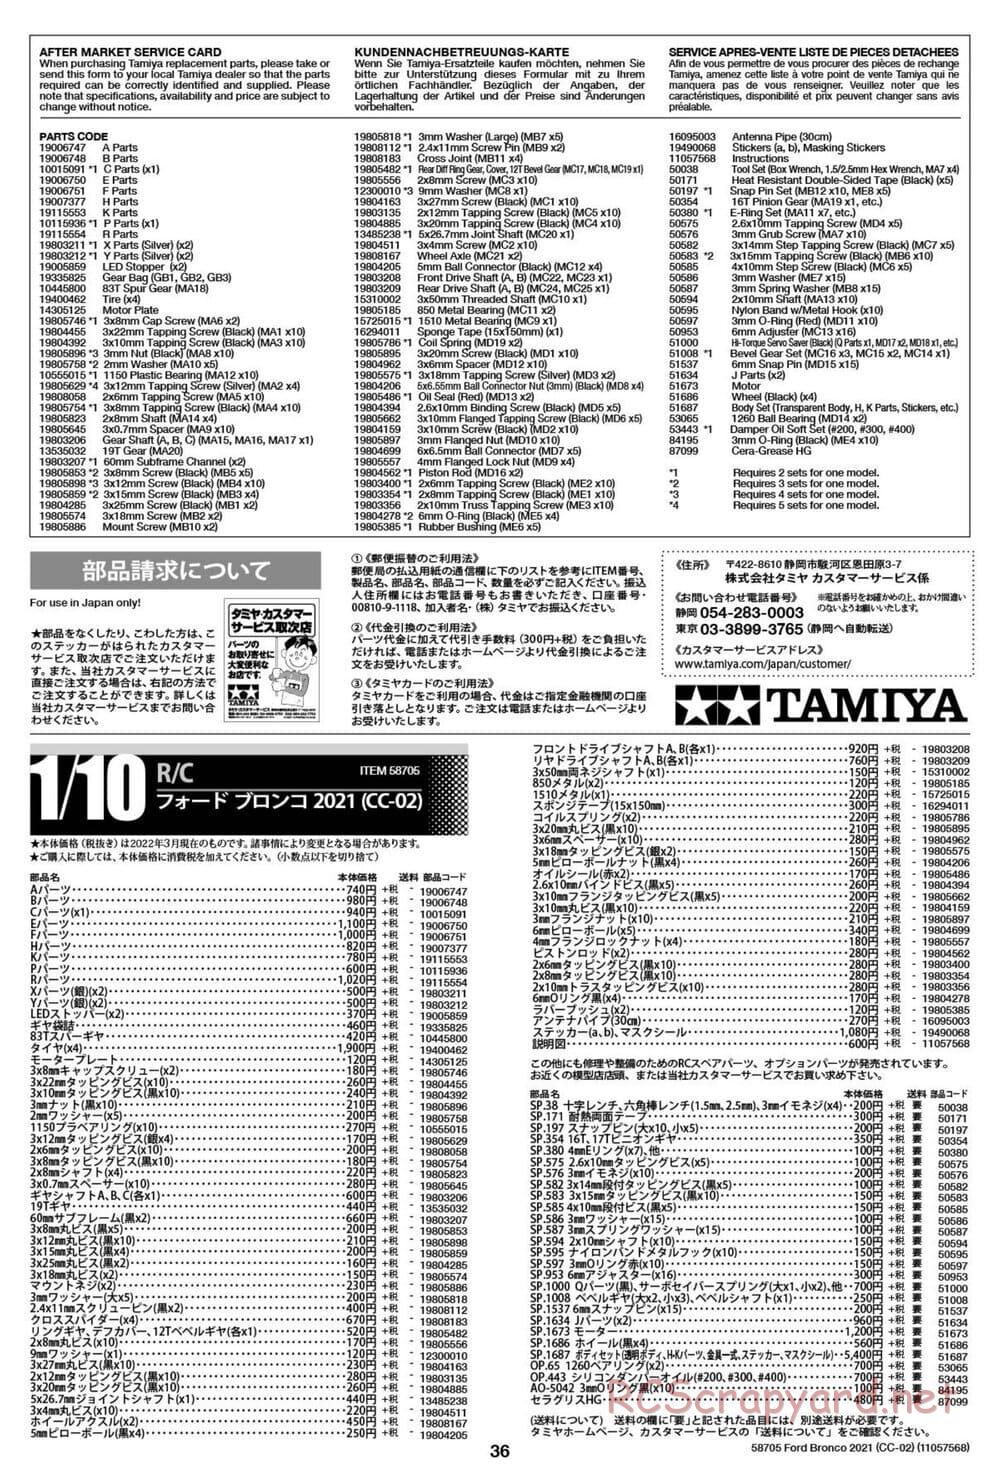 Tamiya - Ford Bronco 2021 - CC-02 Chassis - Manual - Page 36